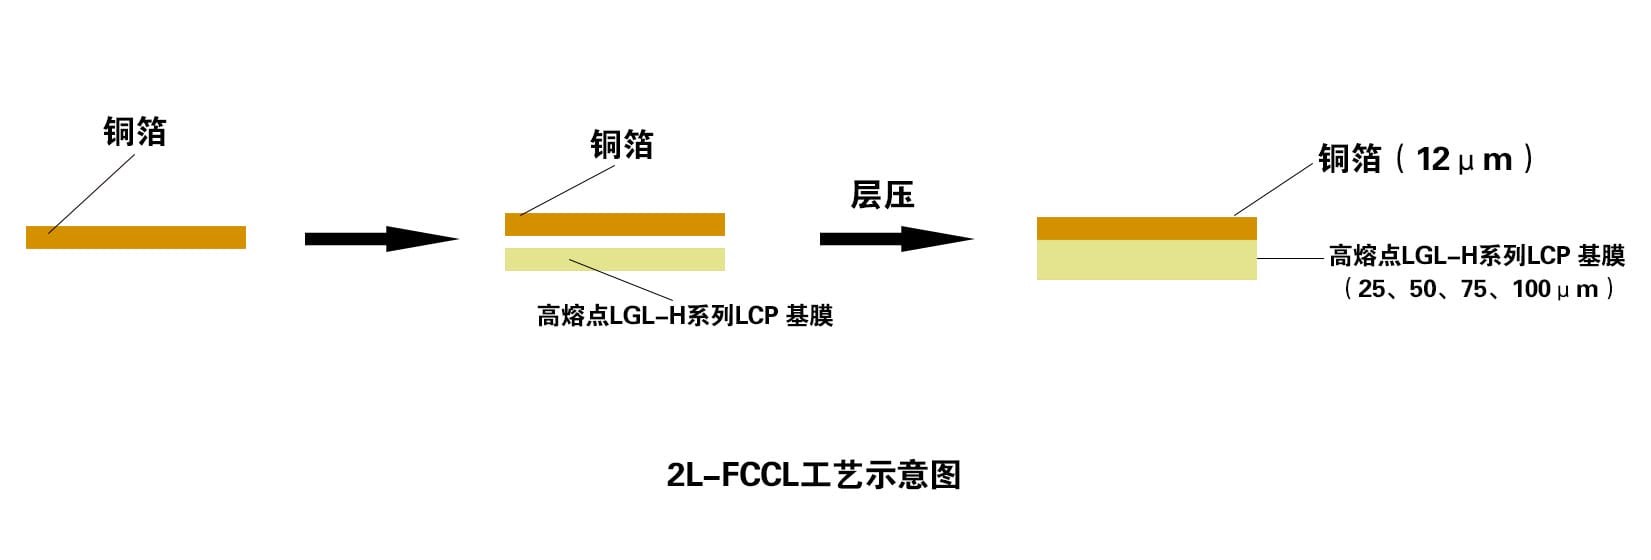 2L-FCCL工艺示意图-单面.jpg